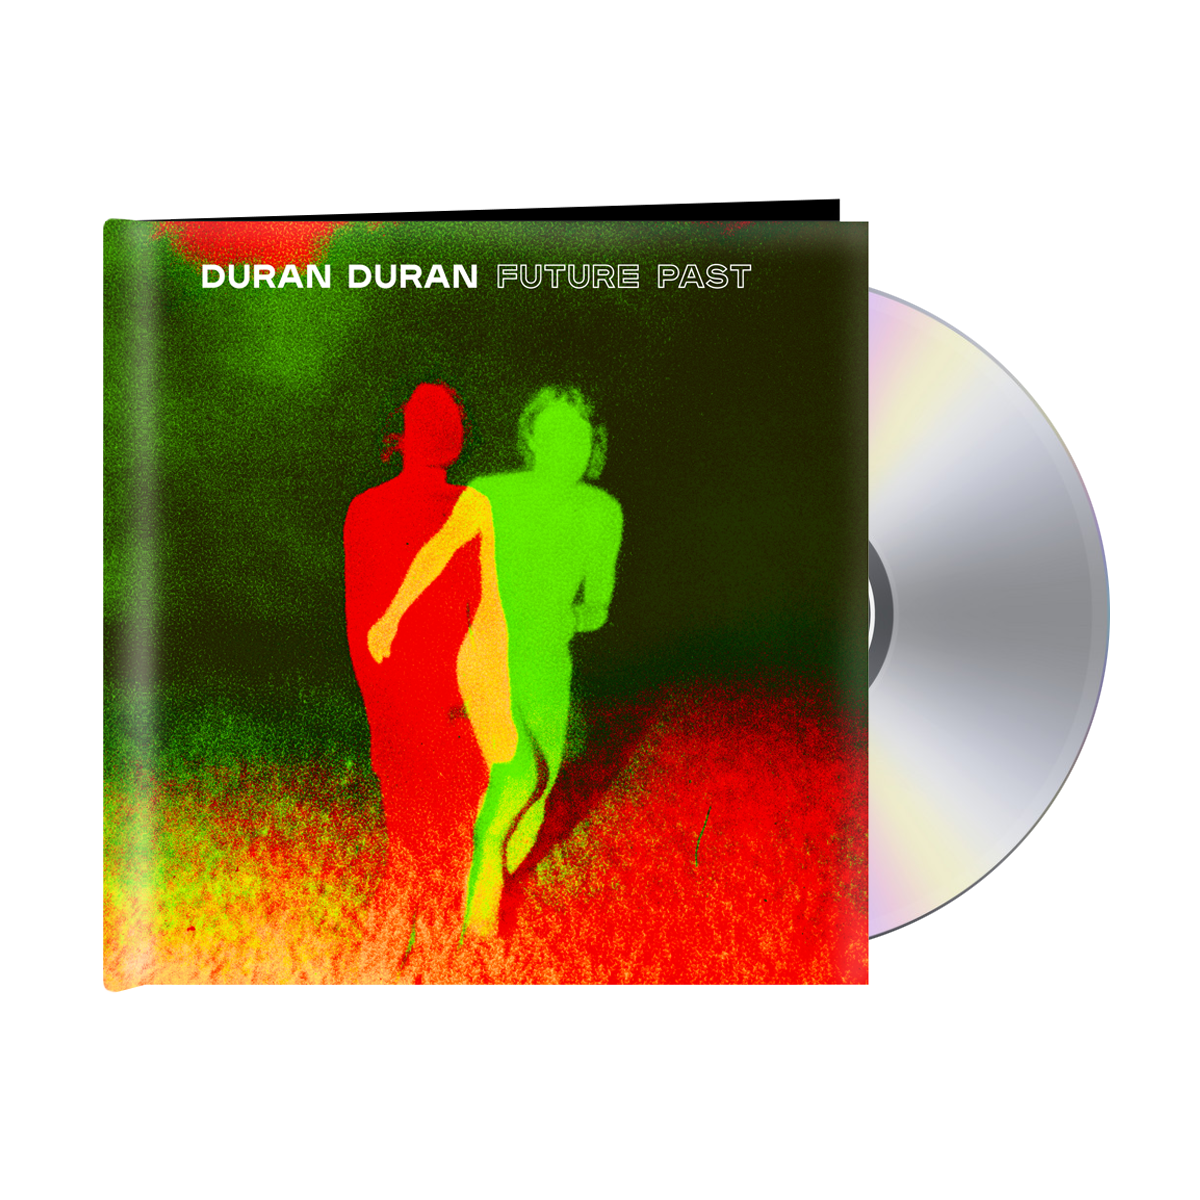 Duran Duran - Future Past (Deluxe CD)